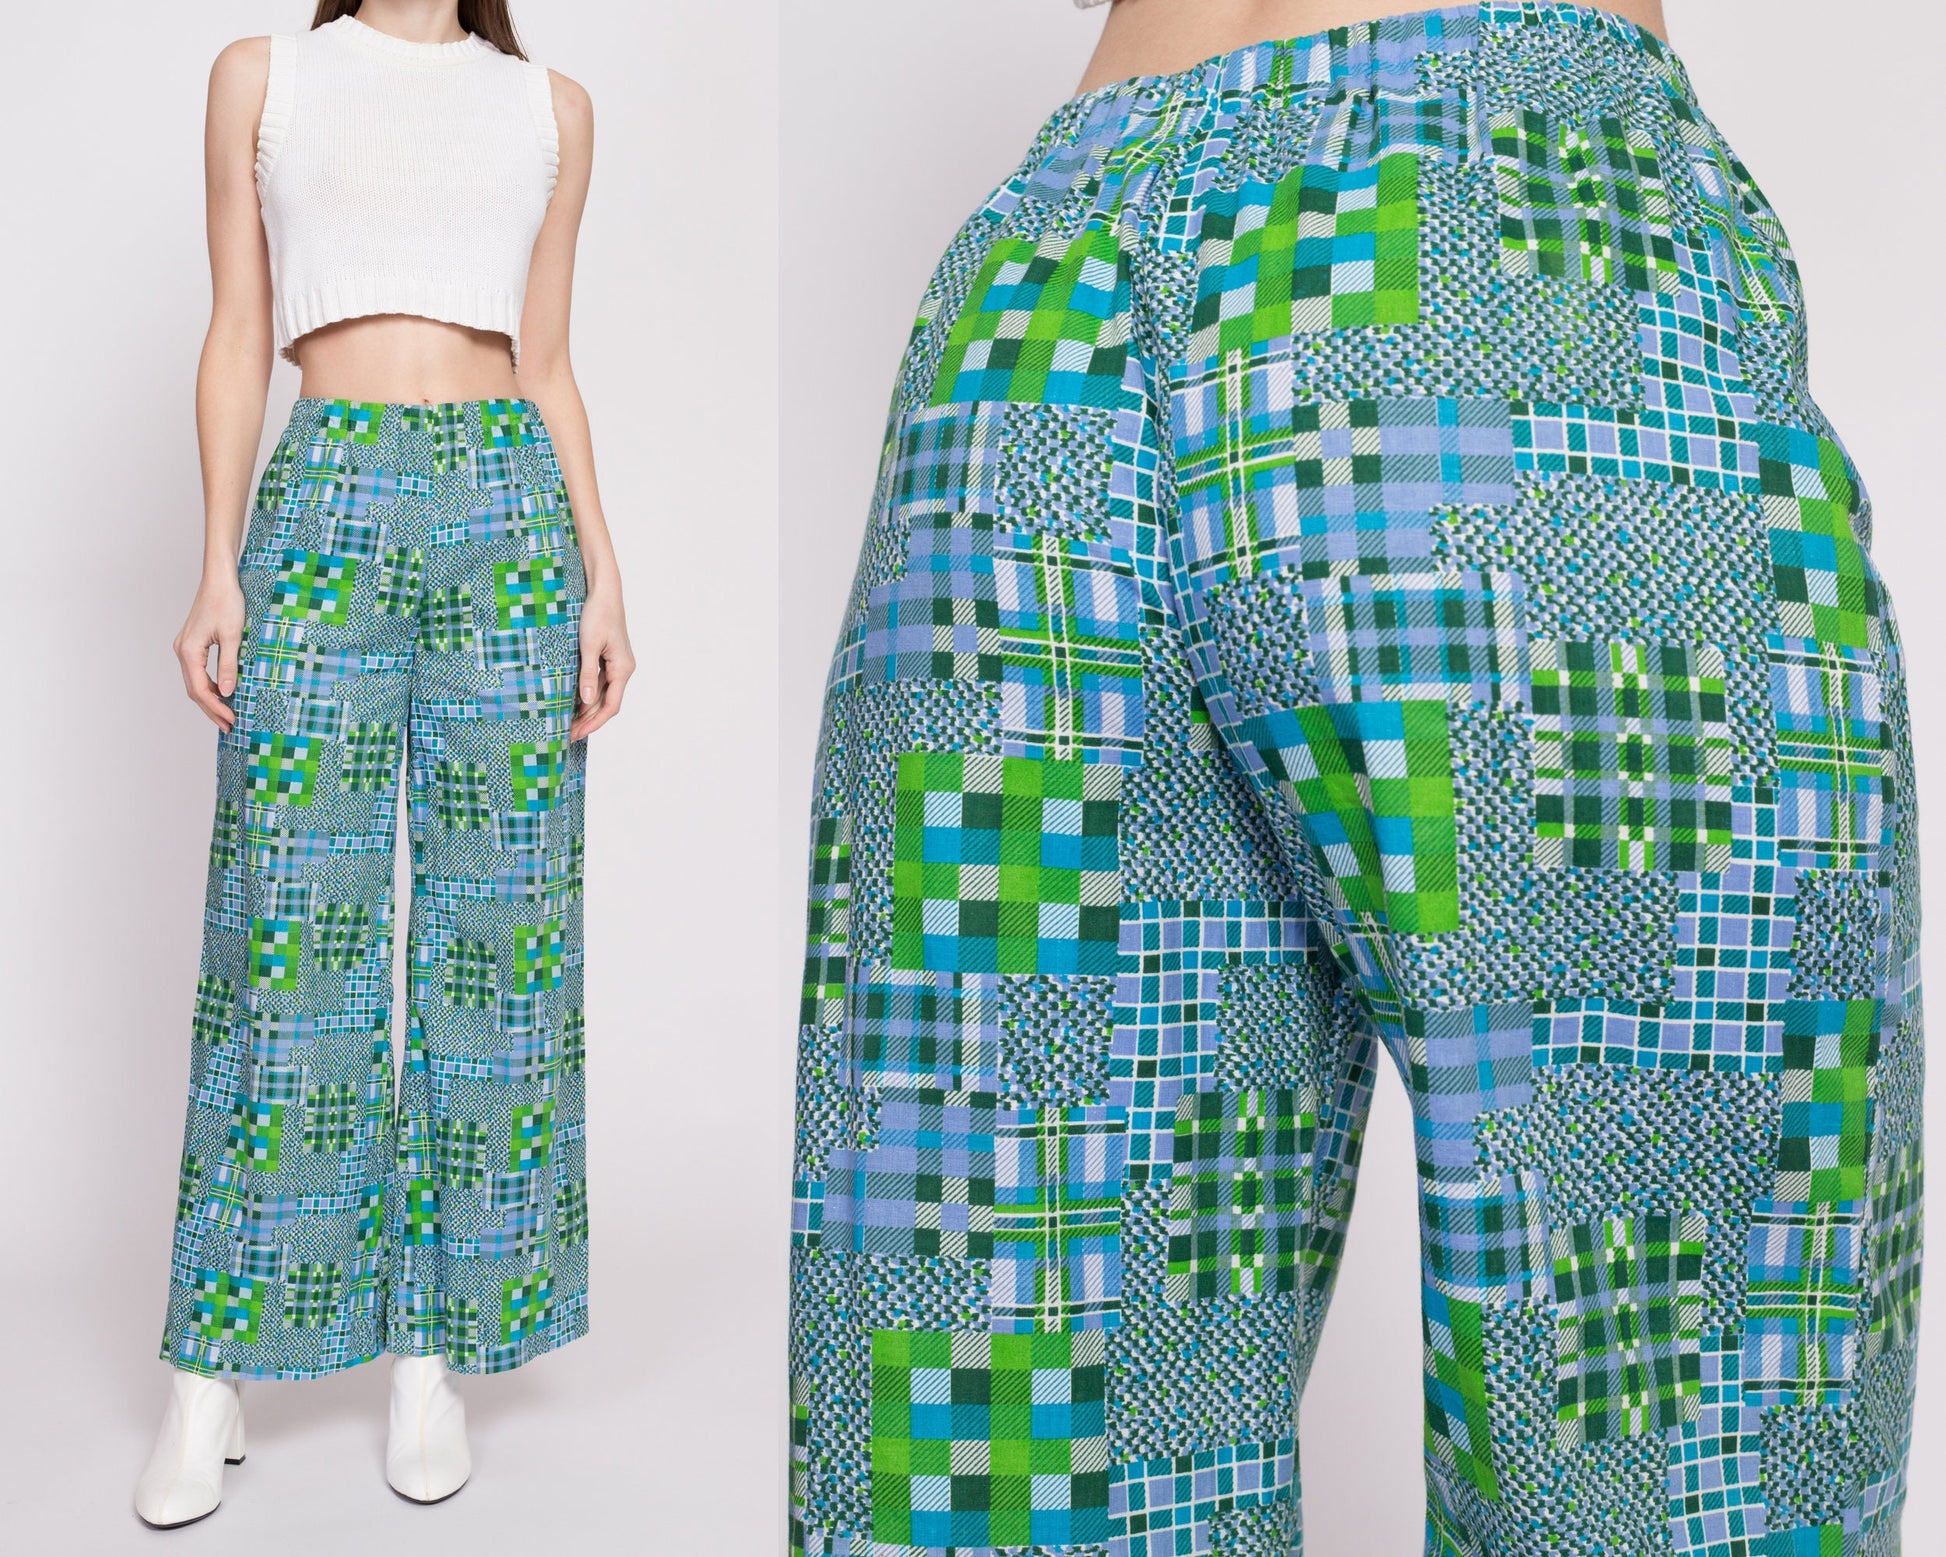 70s Checkered Geometric Print Pants - Small to Medium